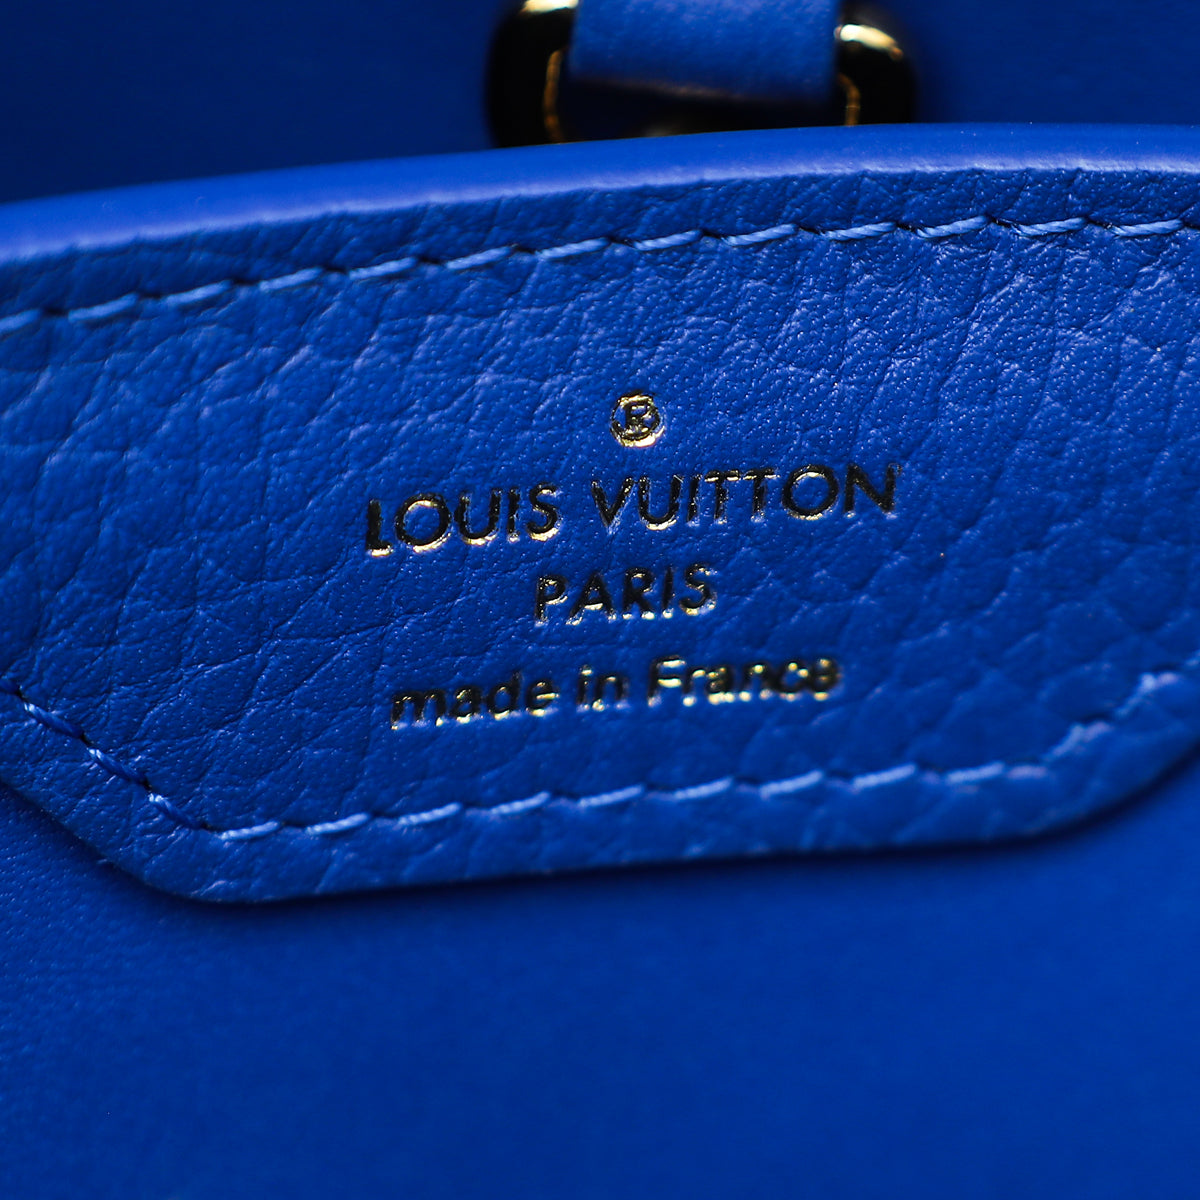 Python handbag Louis Vuitton Blue in Python - 20371699